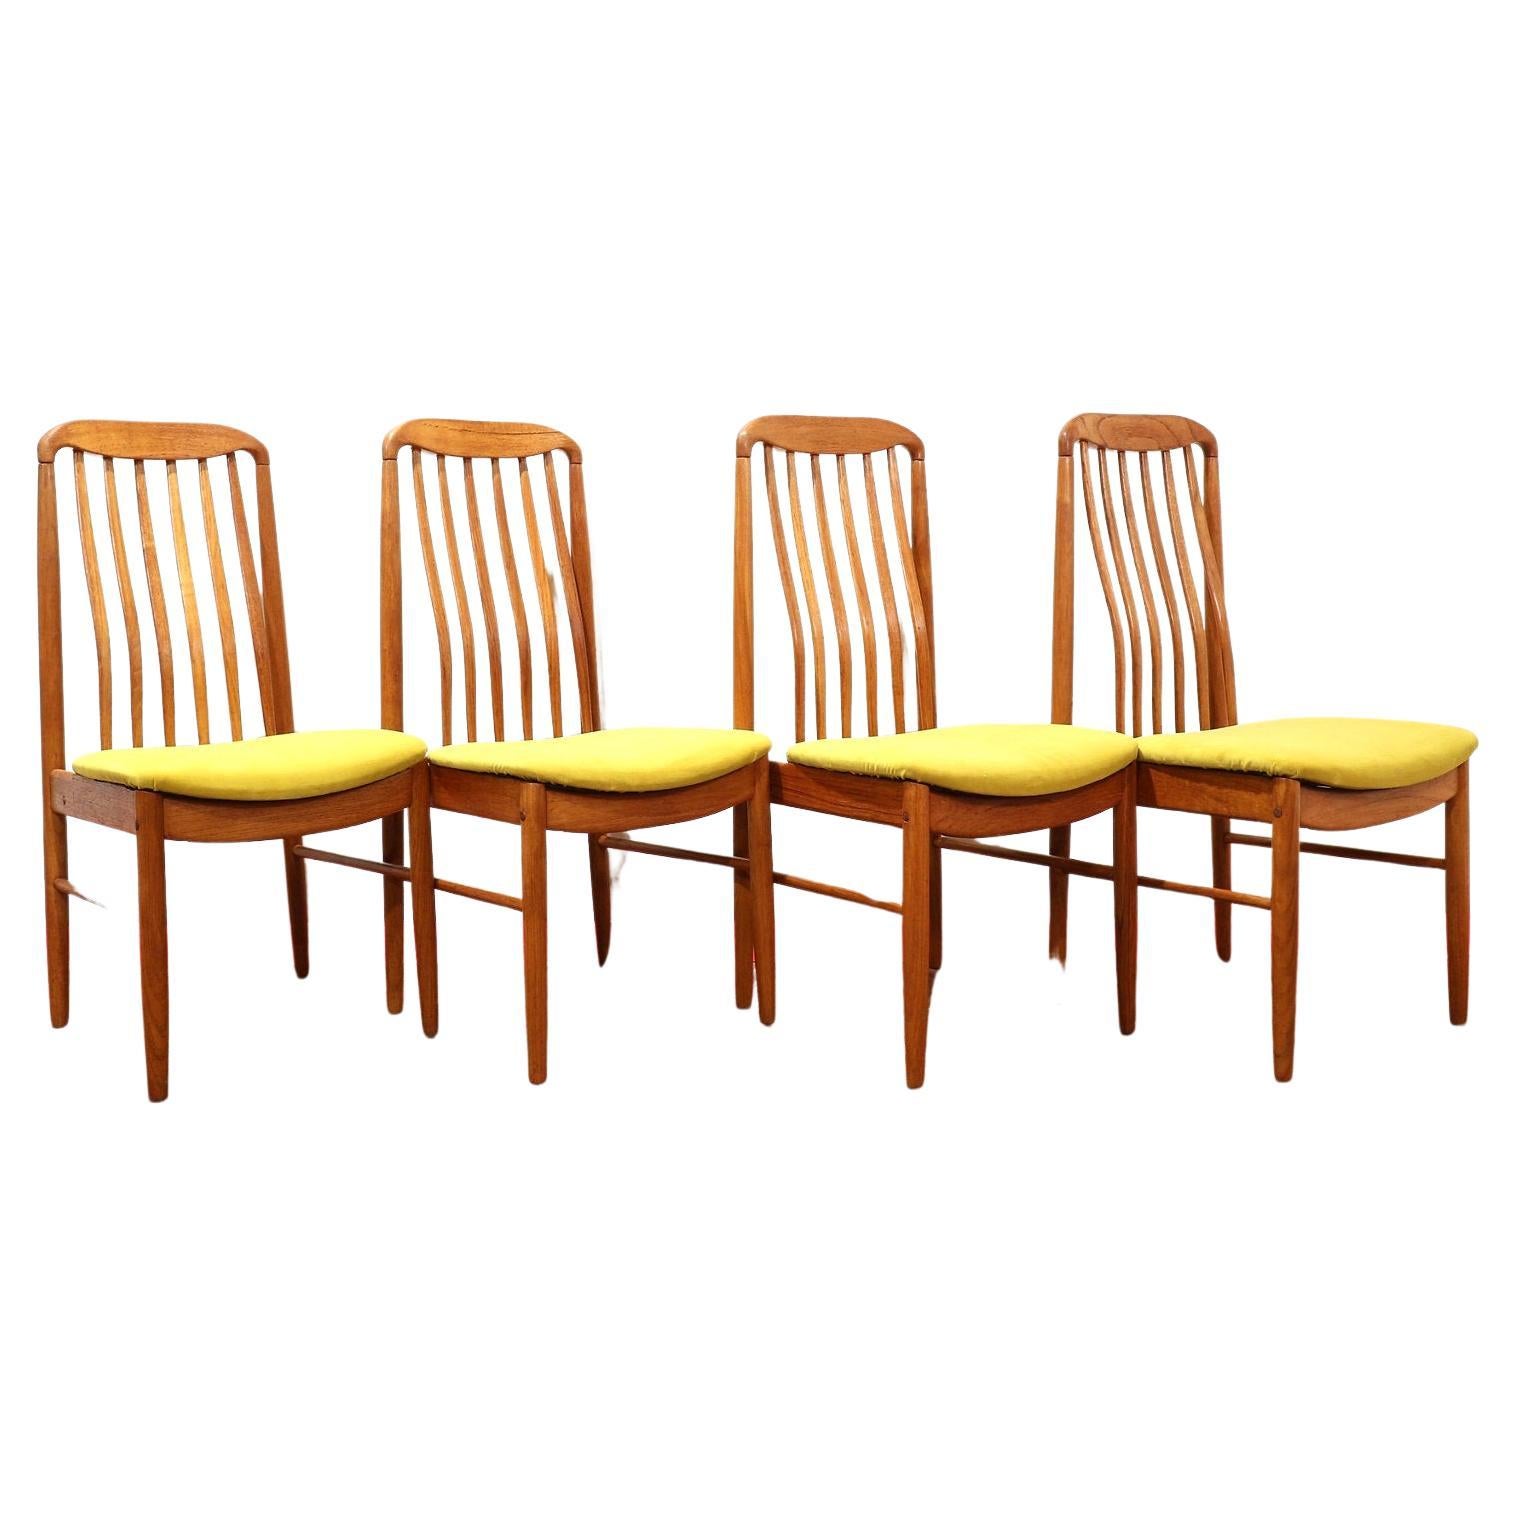 Mid-Century Modern Teak Danish Dining Chairs x 4 by Benni Linden in Yellow